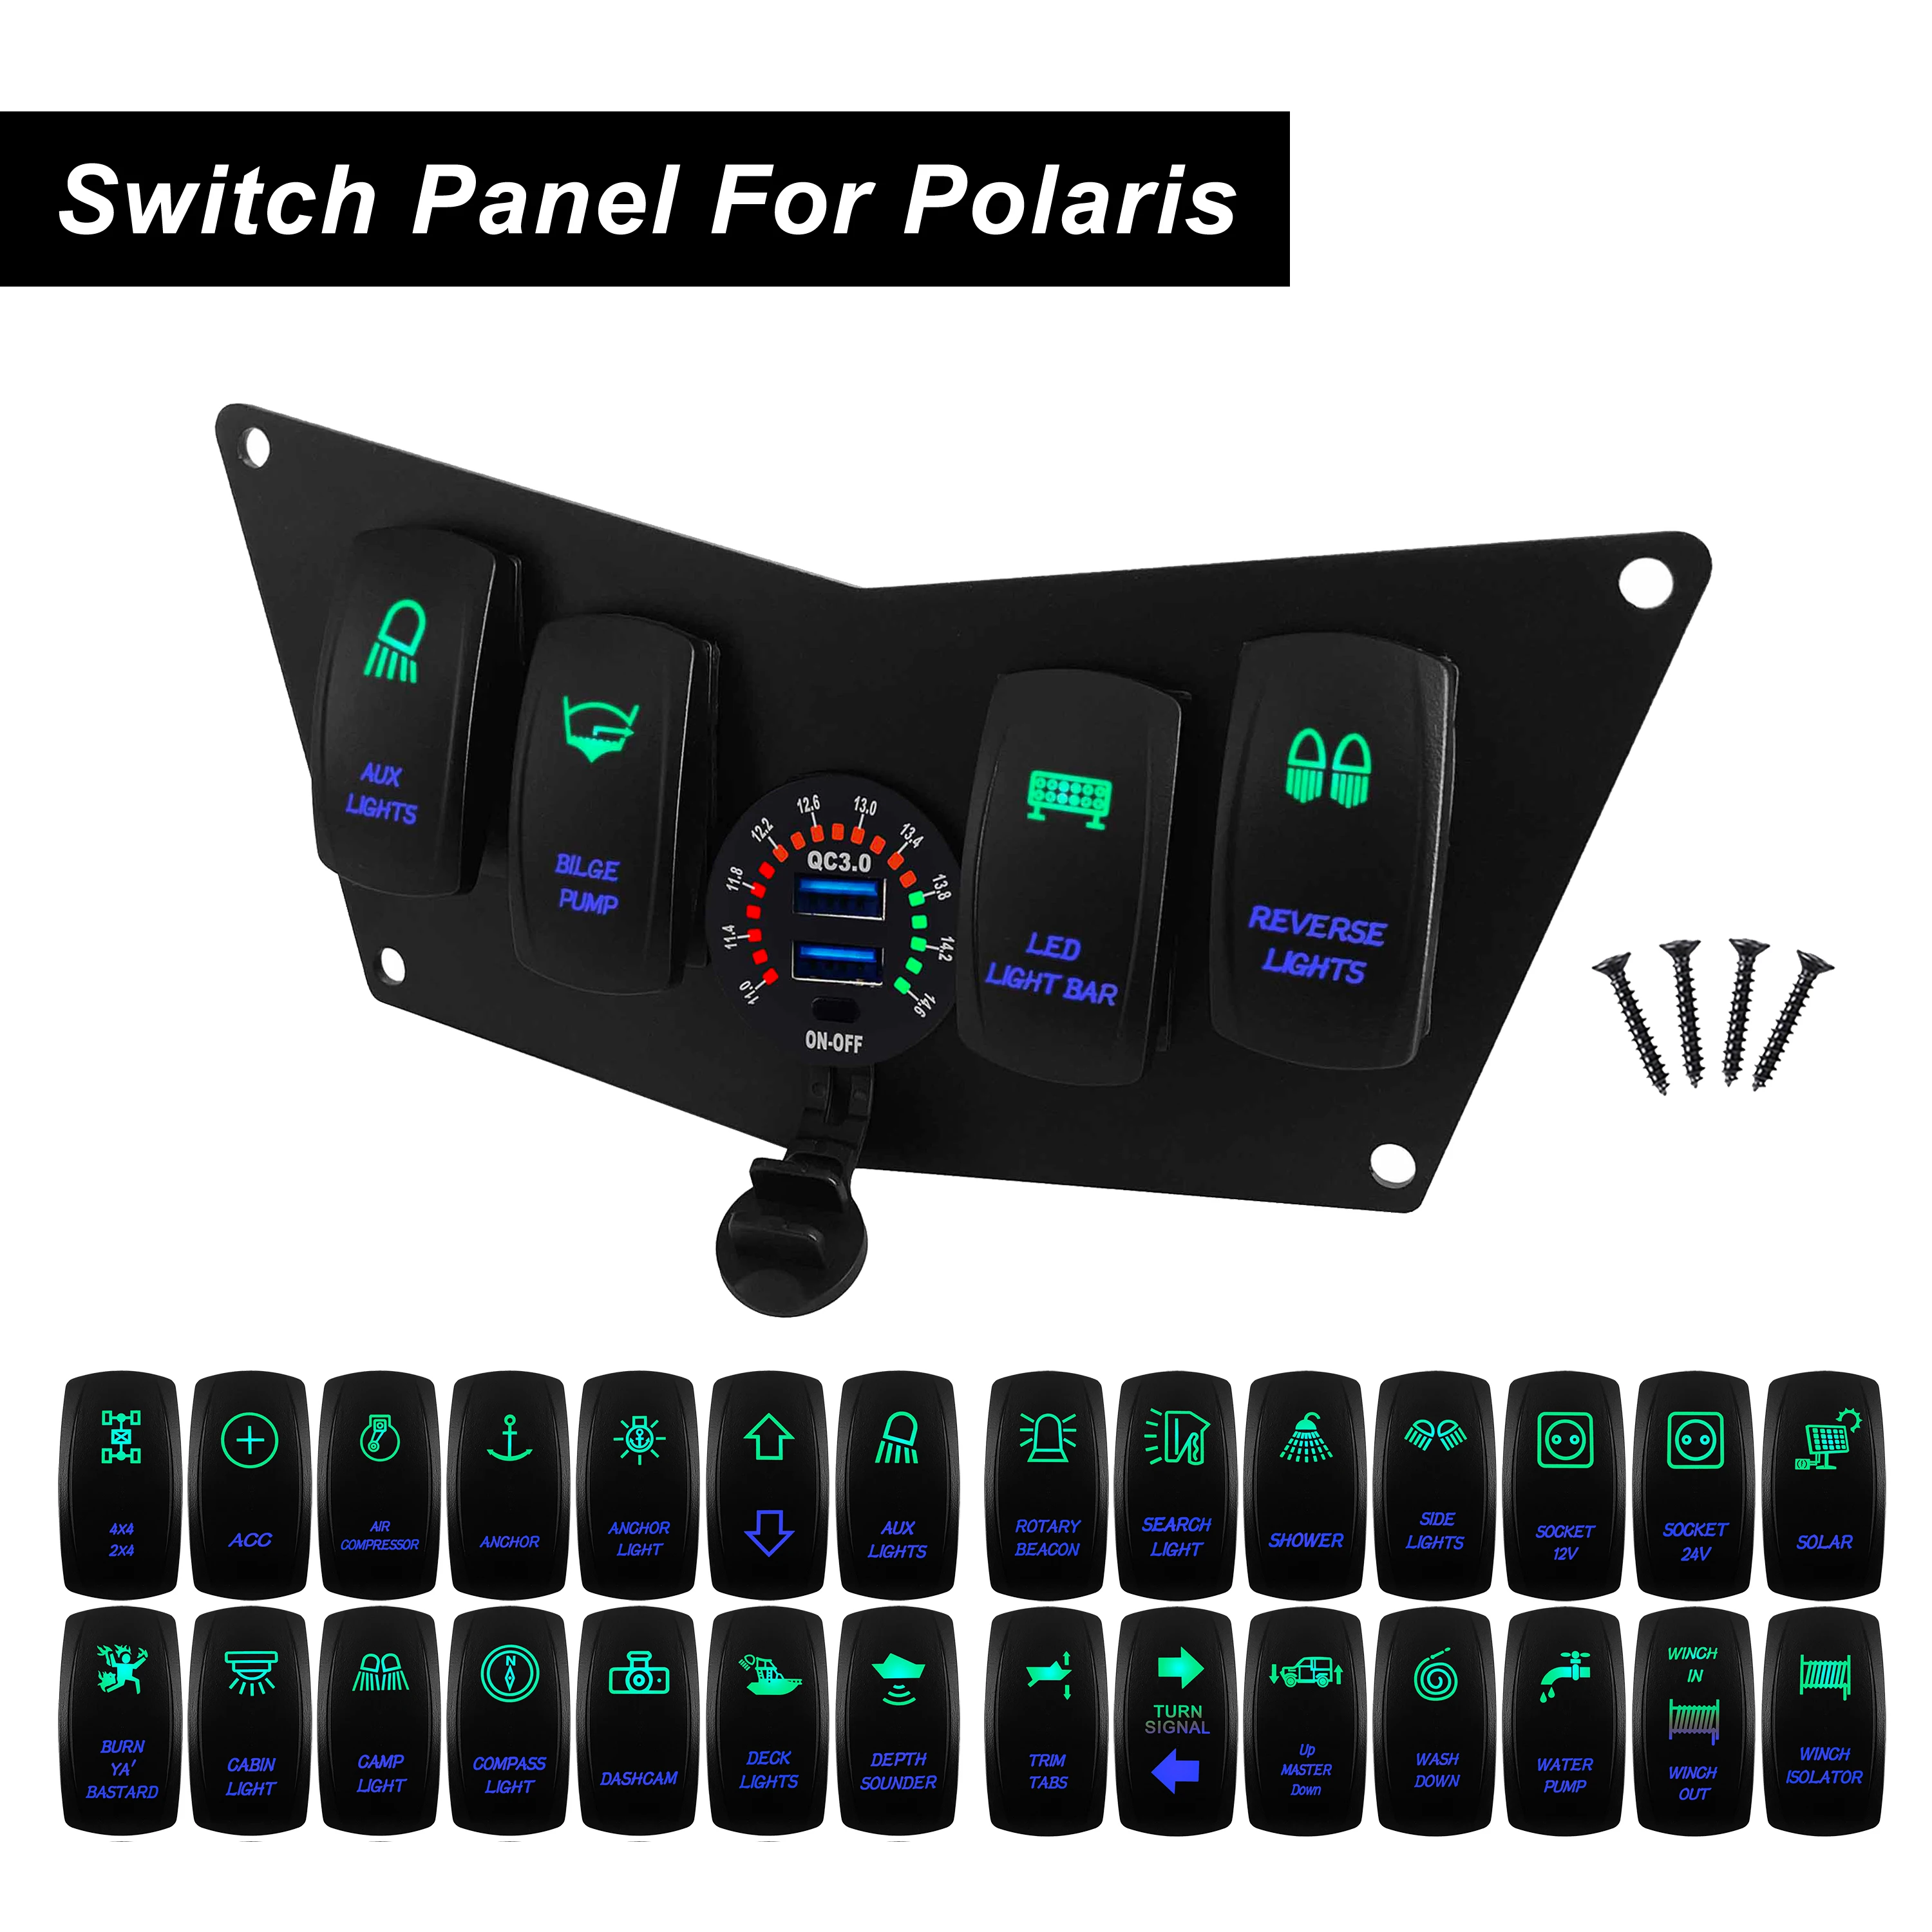 Green & Blue Led 4 Gang Rocker Switch Panel QC 3.0 USB & Voltmeter for Polaris, Multi-logos Waterproof IP68 Switch Marine Grade